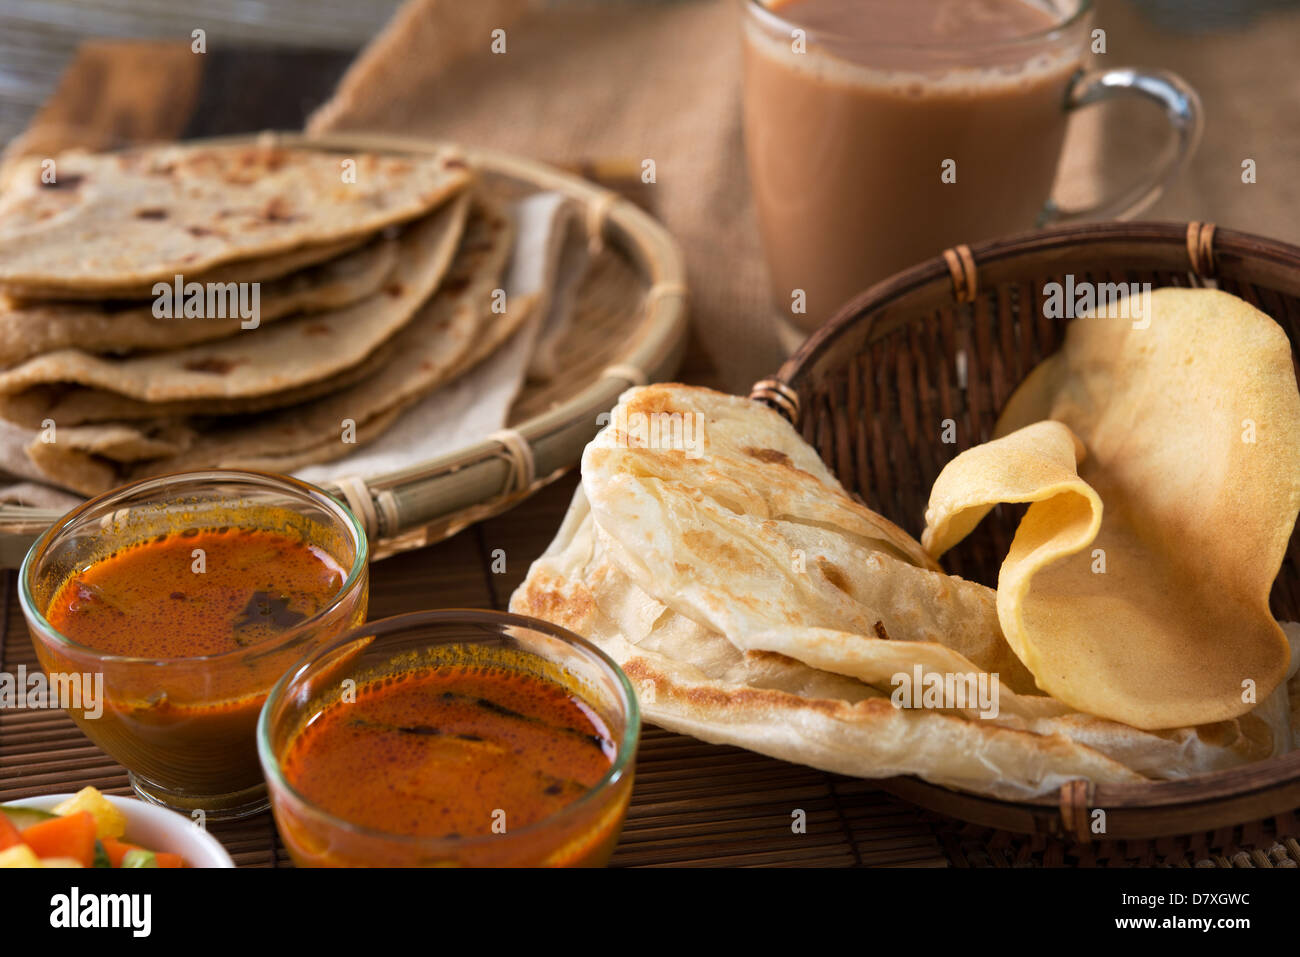 Roti canai, Chapati or Flat bread, teh tarik or milk tea and curry, famous Malaysian Indian food. Stock Photo